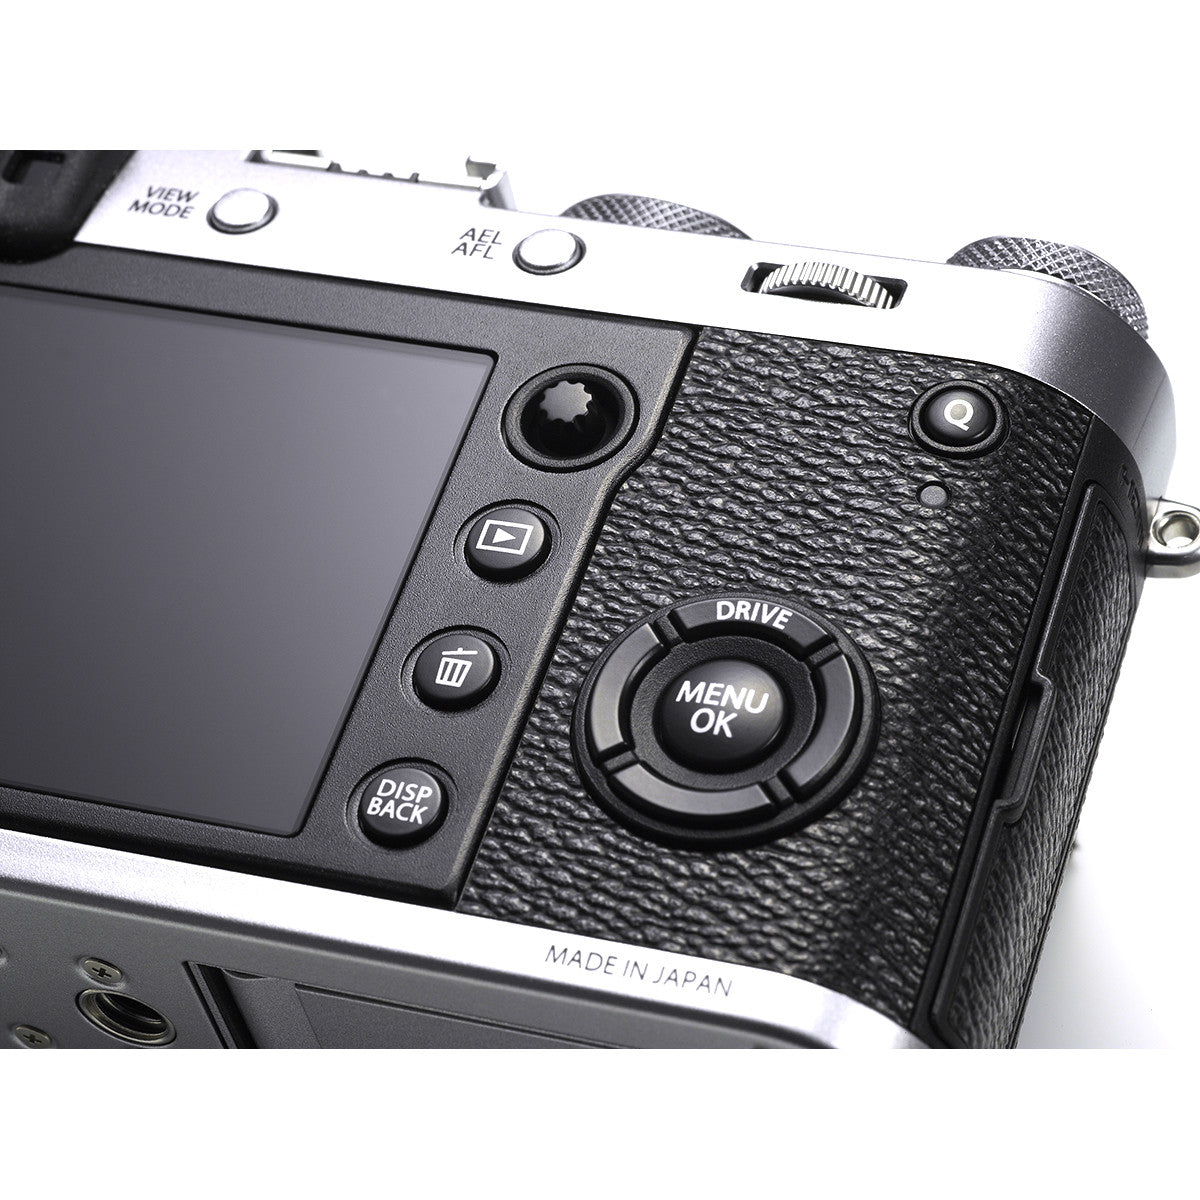 Fujifilm X100F Digital Camera (Silver), camera point & shoot cameras, Fujifilm - Pictureline  - 2